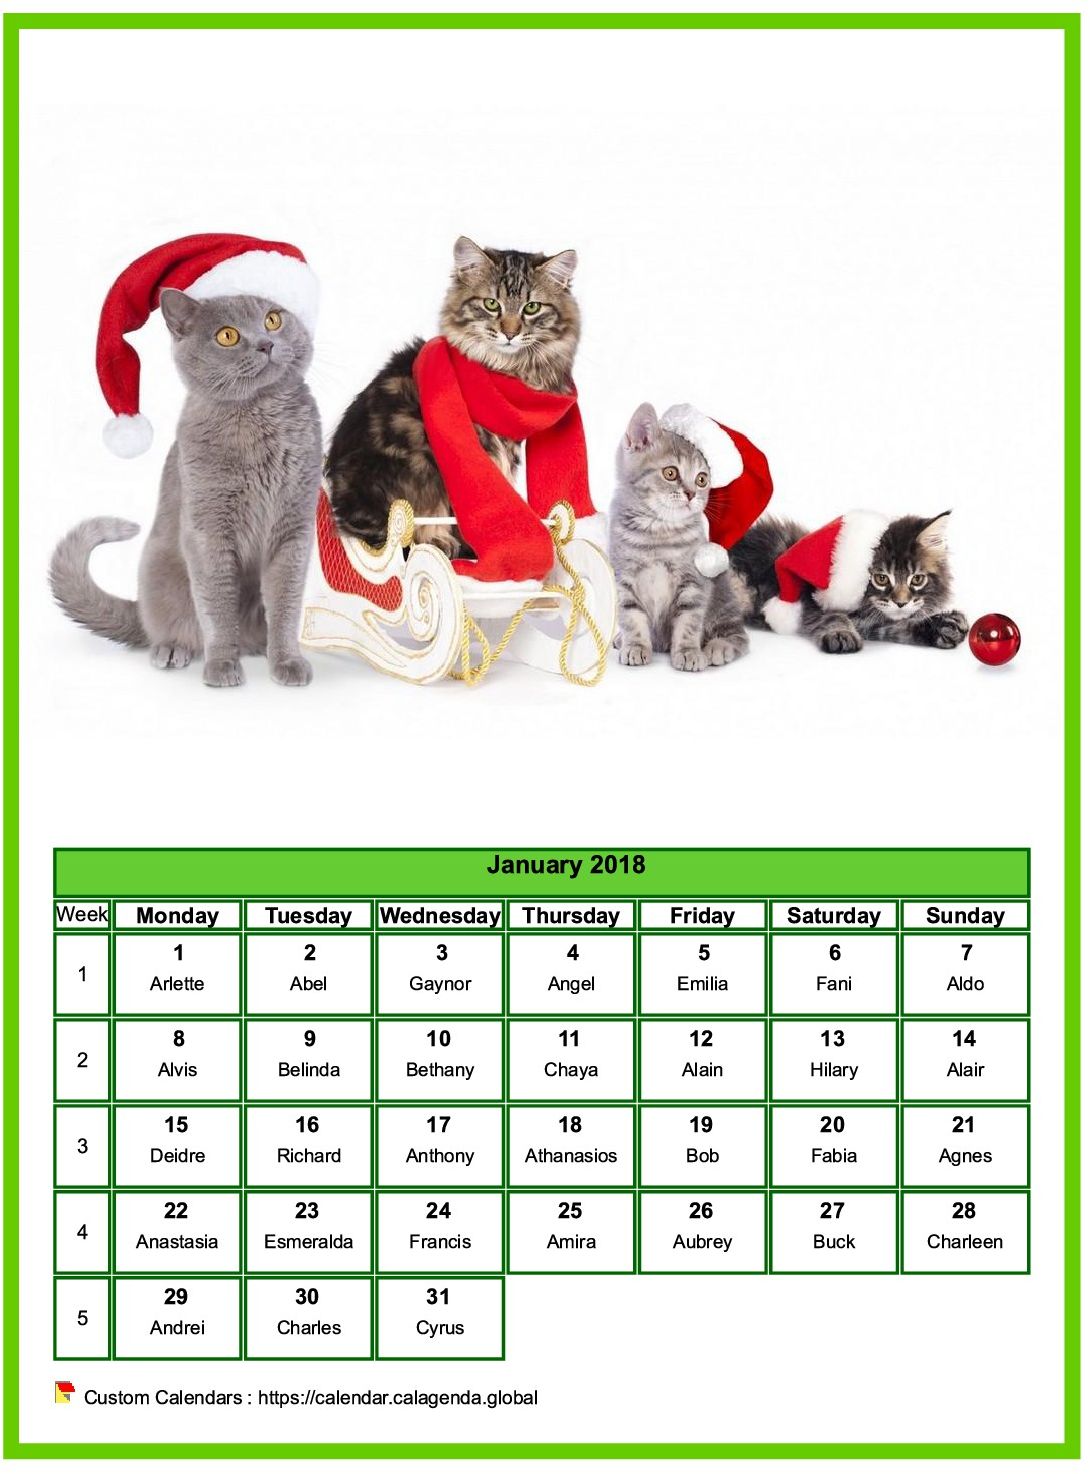 Calendar January 2018 cats